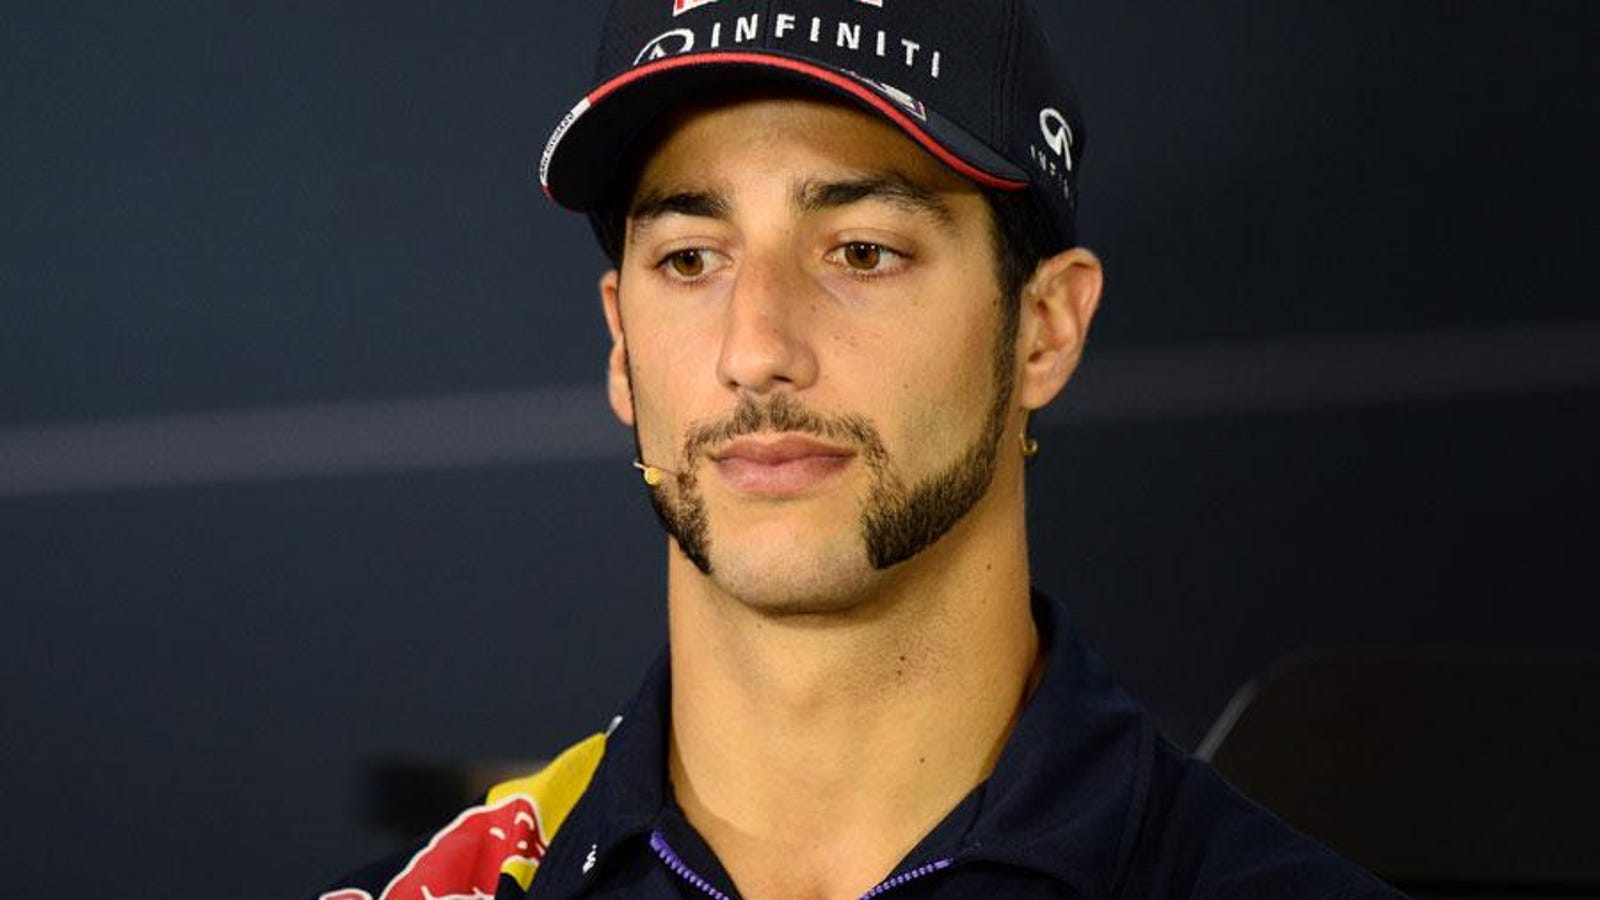 Ricciardo has some interesting facial hair this weekend...